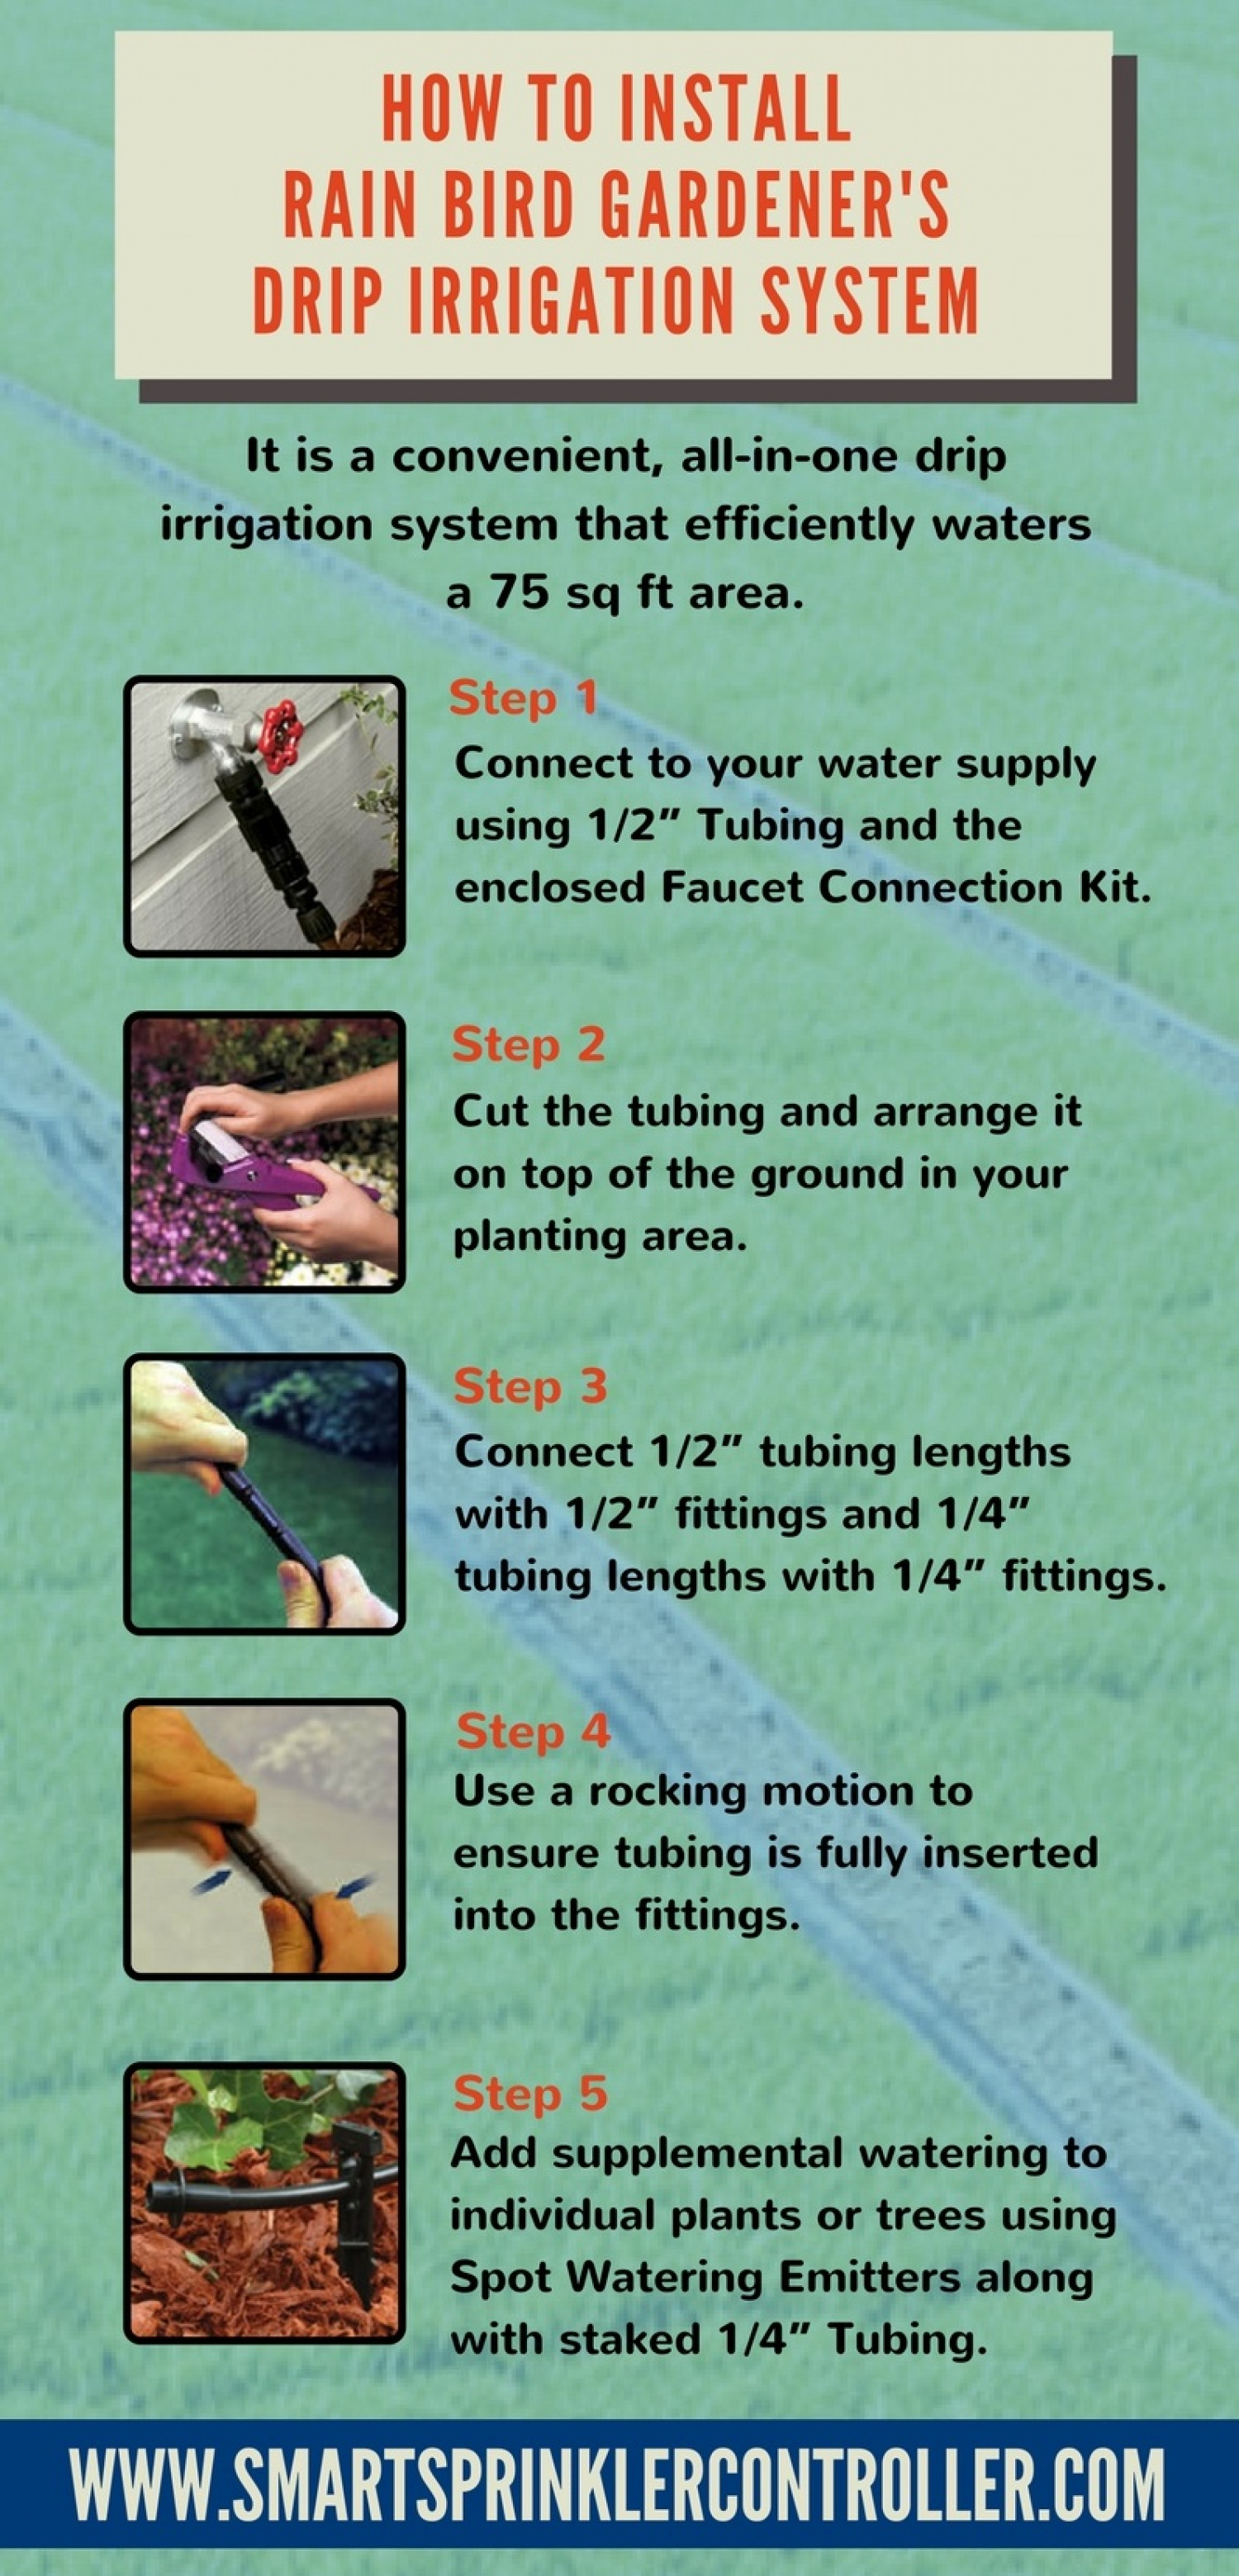 How to install Rain Bird Gardener's Drip Irrigation System Infographic